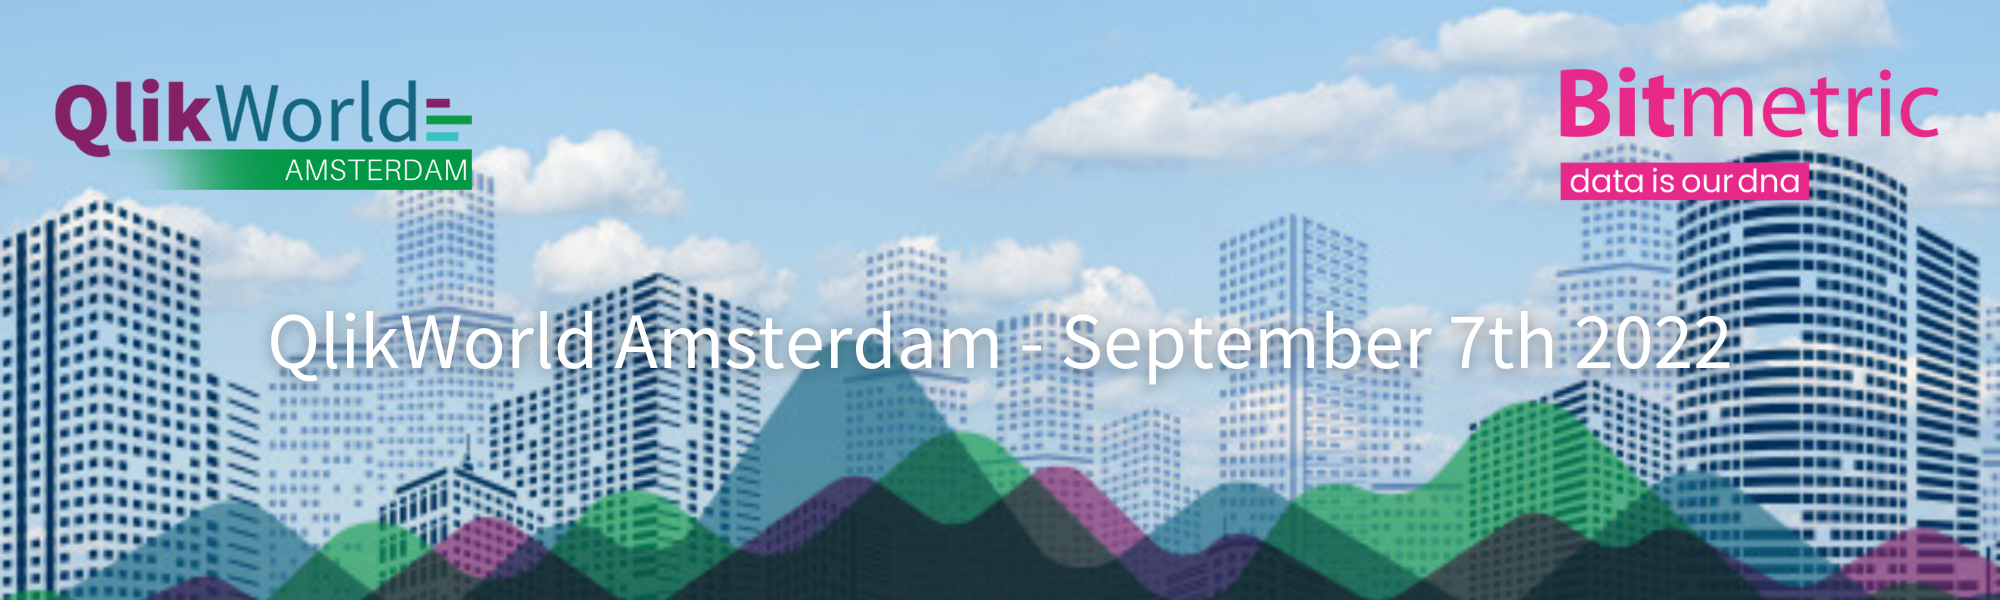 QlikWorld Amsterdam hosted by Bitmetric on September 7th 2022